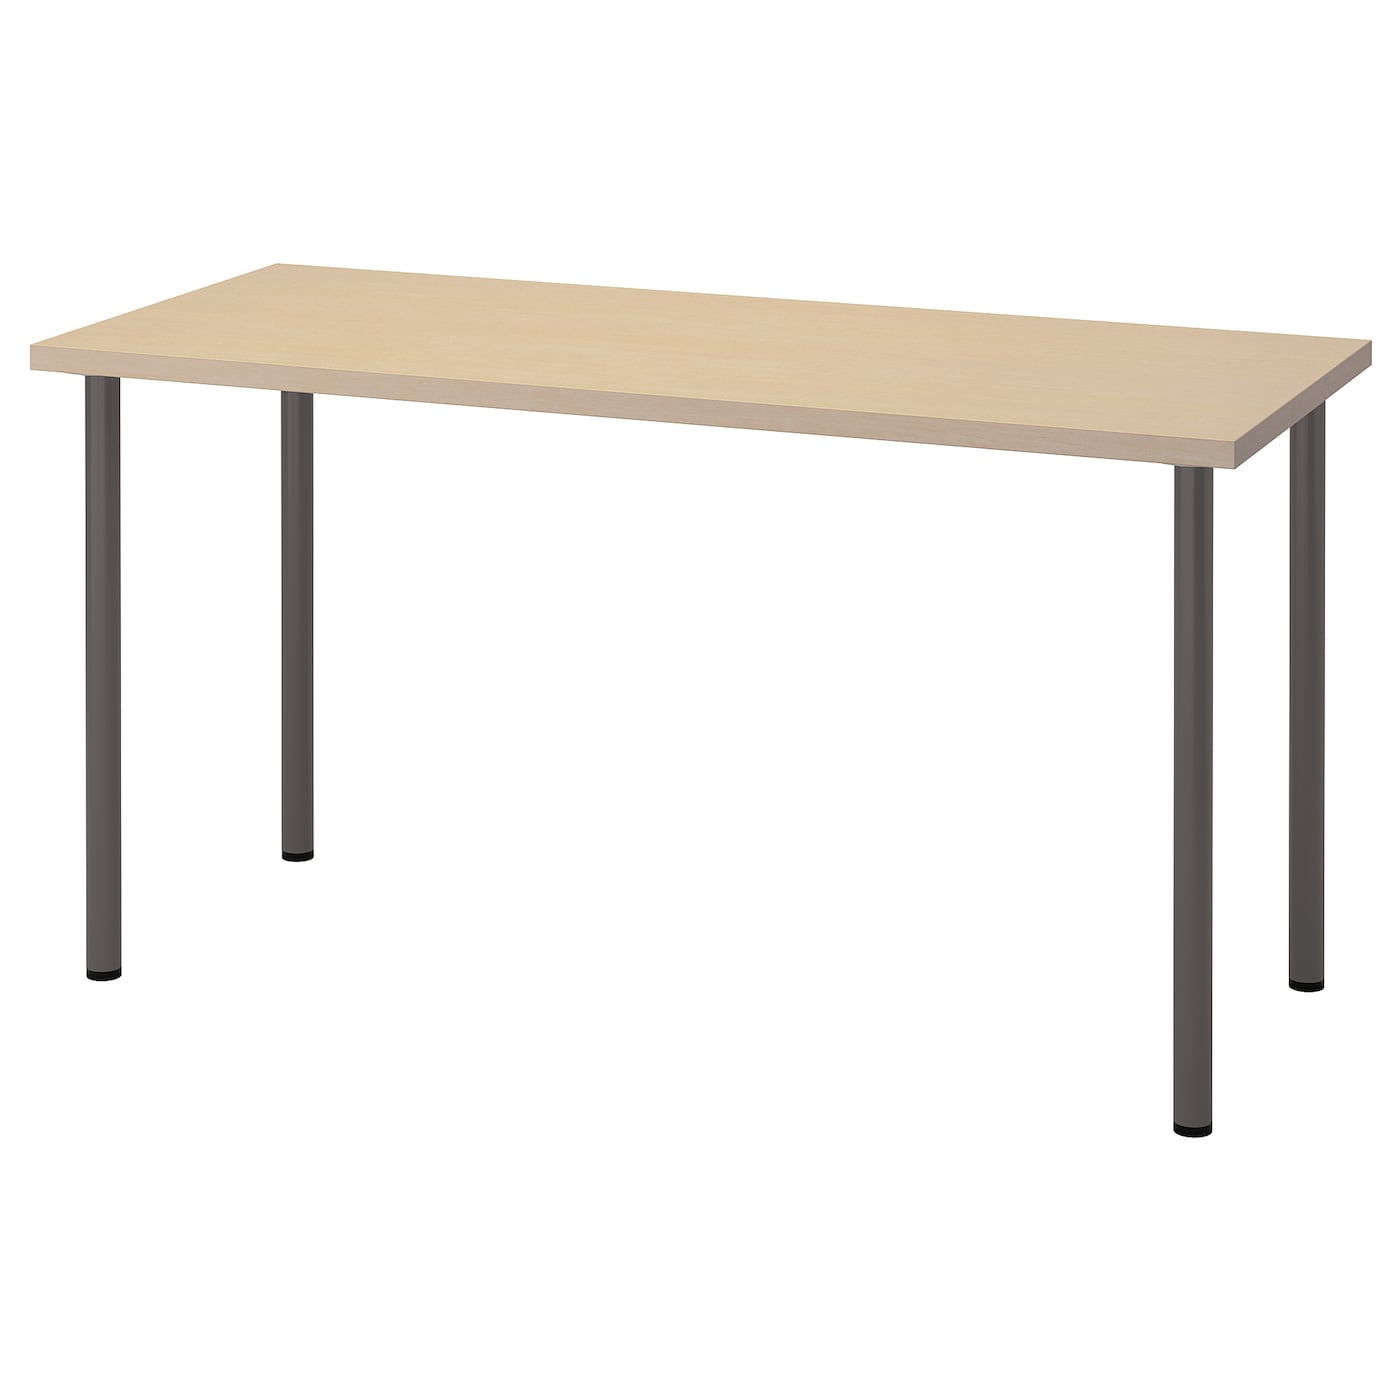 Рабочий стол - IKEA MÅLSKYTT/MALSKYTT/ADILS, 140х60 см, береза/темно-серый, МОЛСКЮТТ/АДИЛЬС ИКЕА